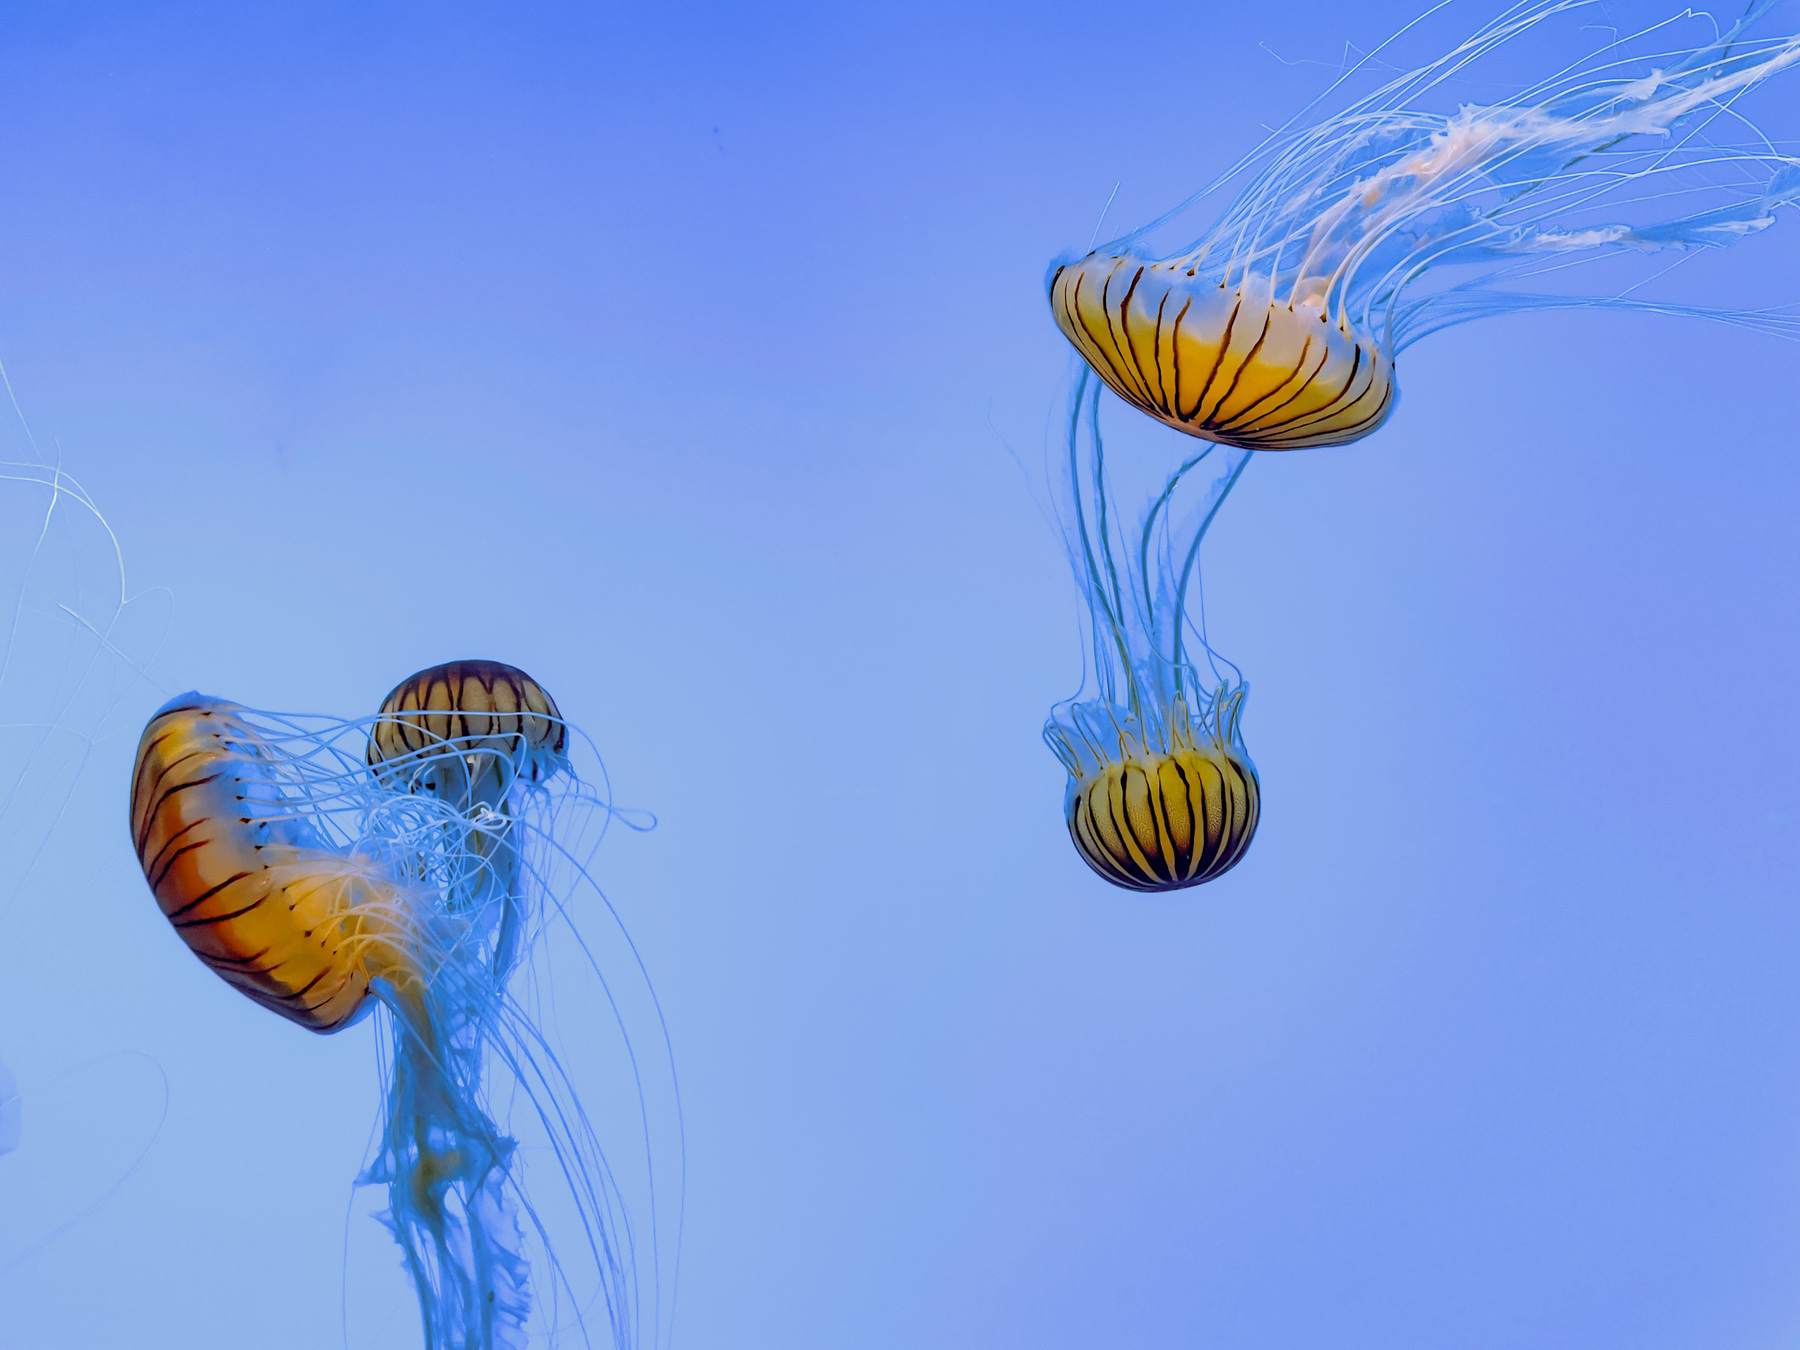 Jellyfish at the National Aquarium in Baltimore, Maryland